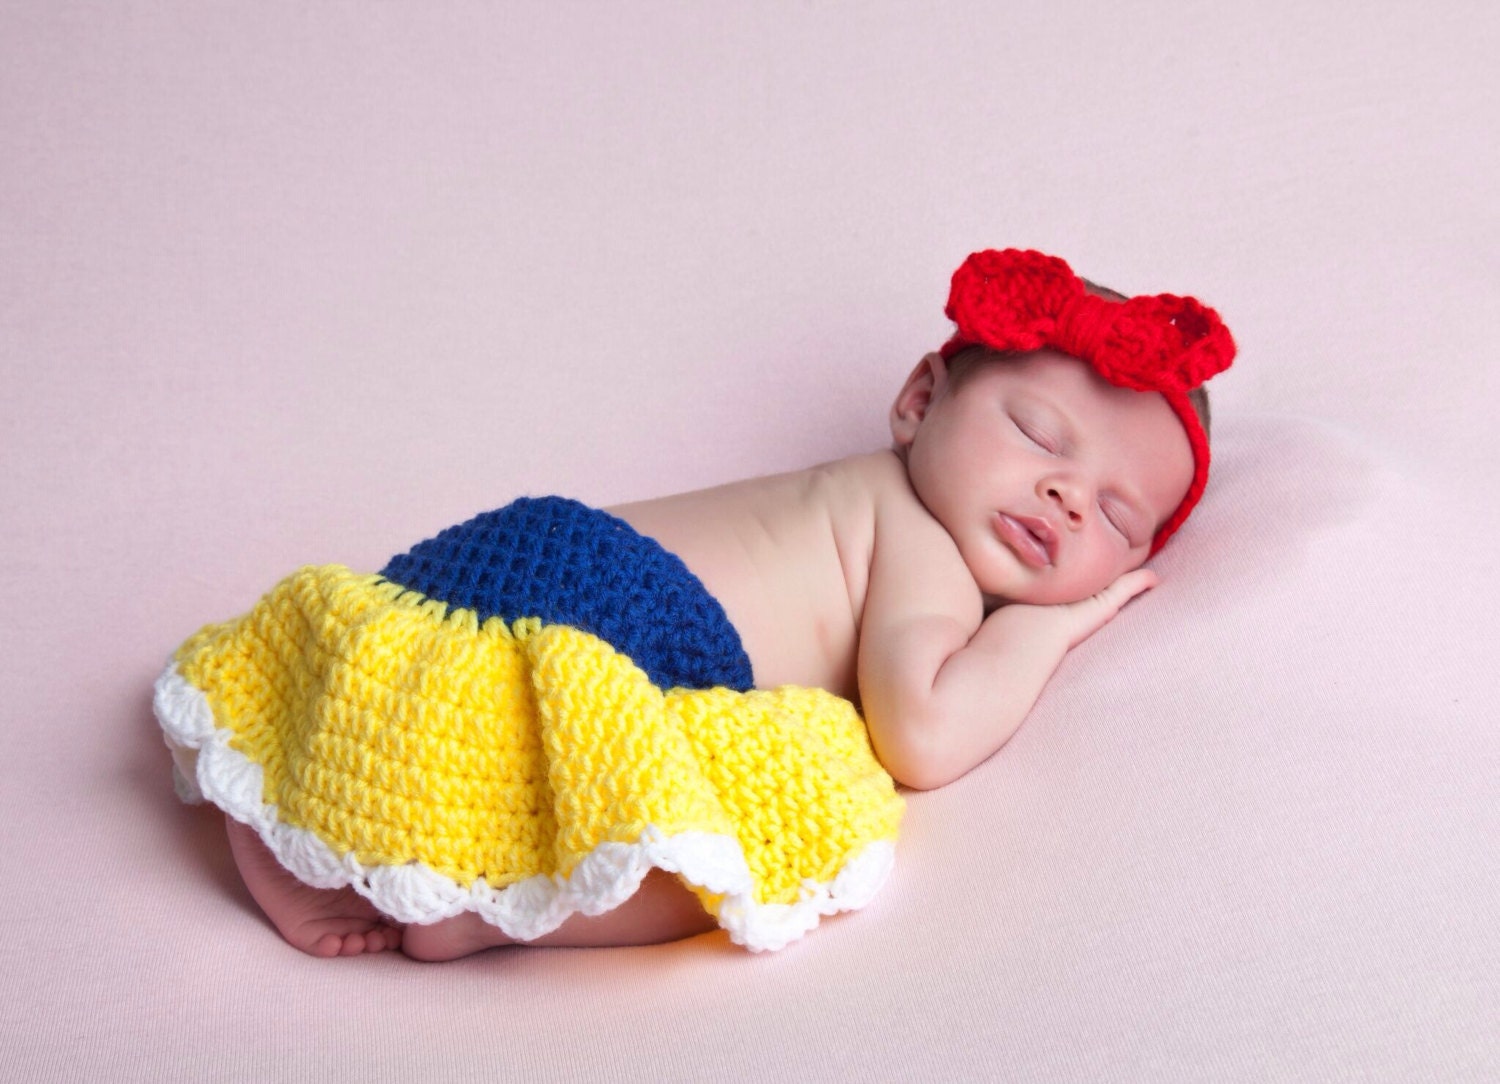 Princess Costume, Baby Princess, Baby Princess Outfit, Crochet Princess,  Newborn Princess, Newborn Photo Prop, Baby Snow White 